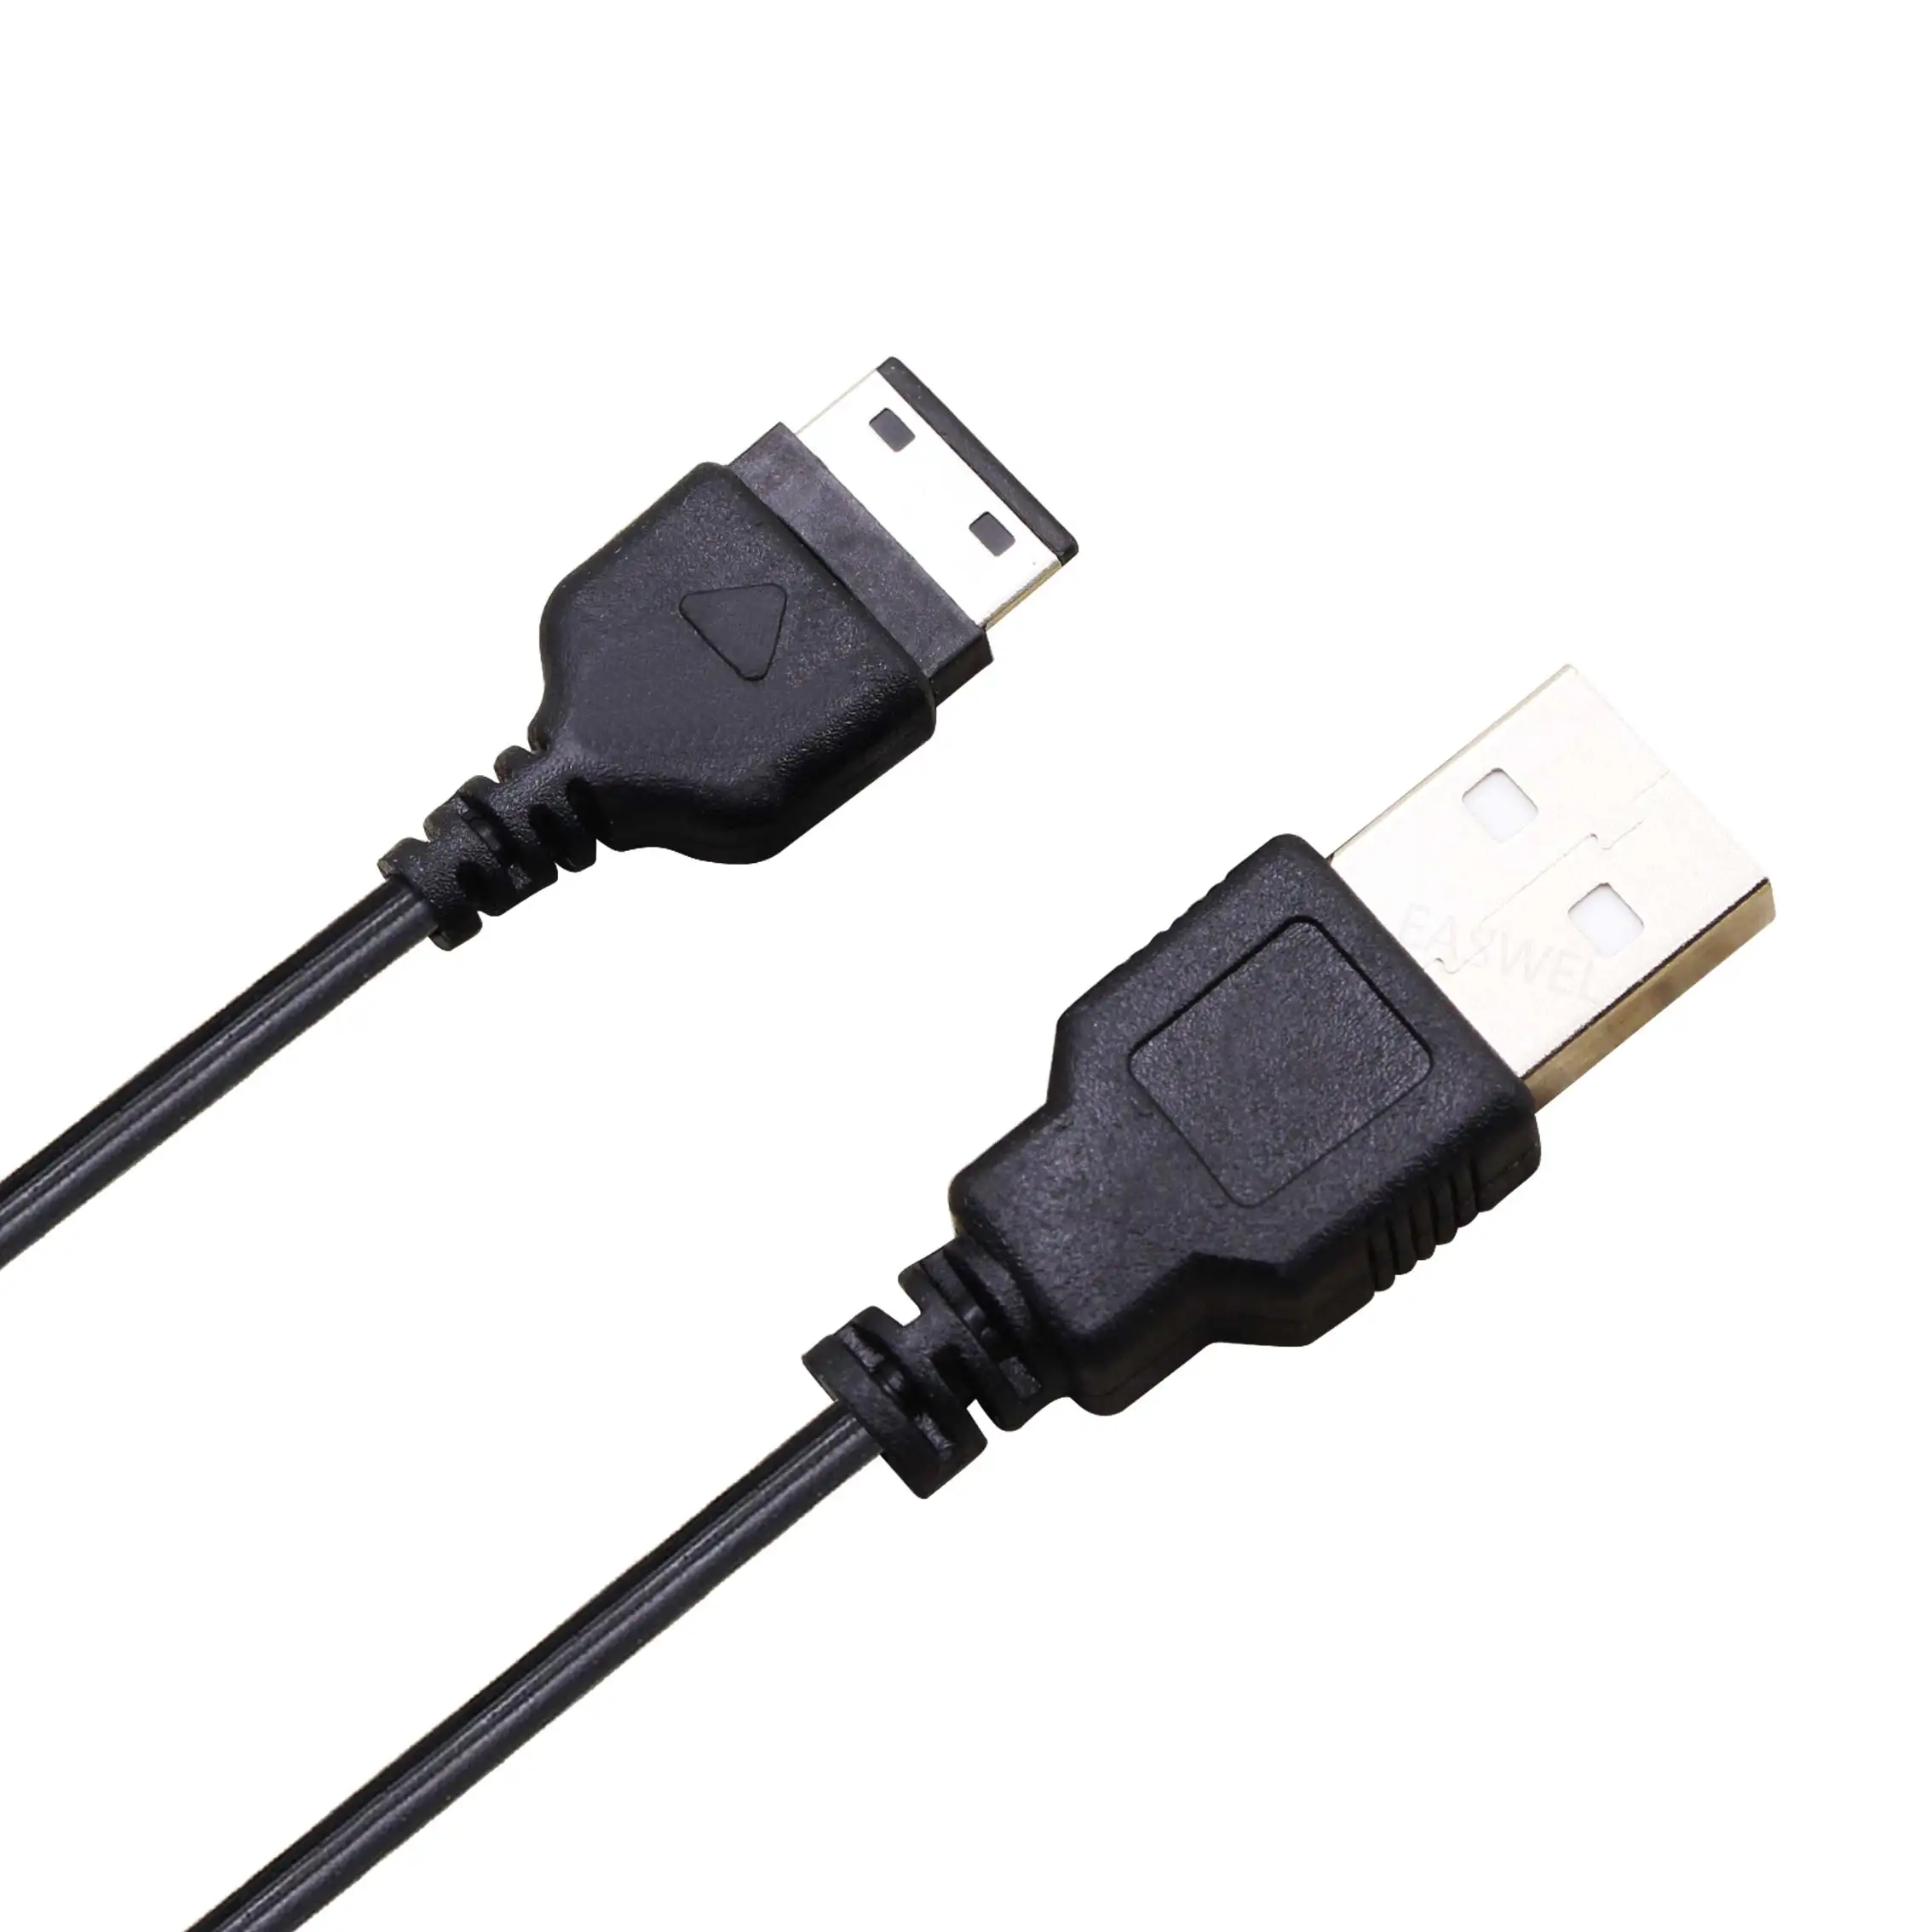 Cable de datos USB para Samsung sgh-e360